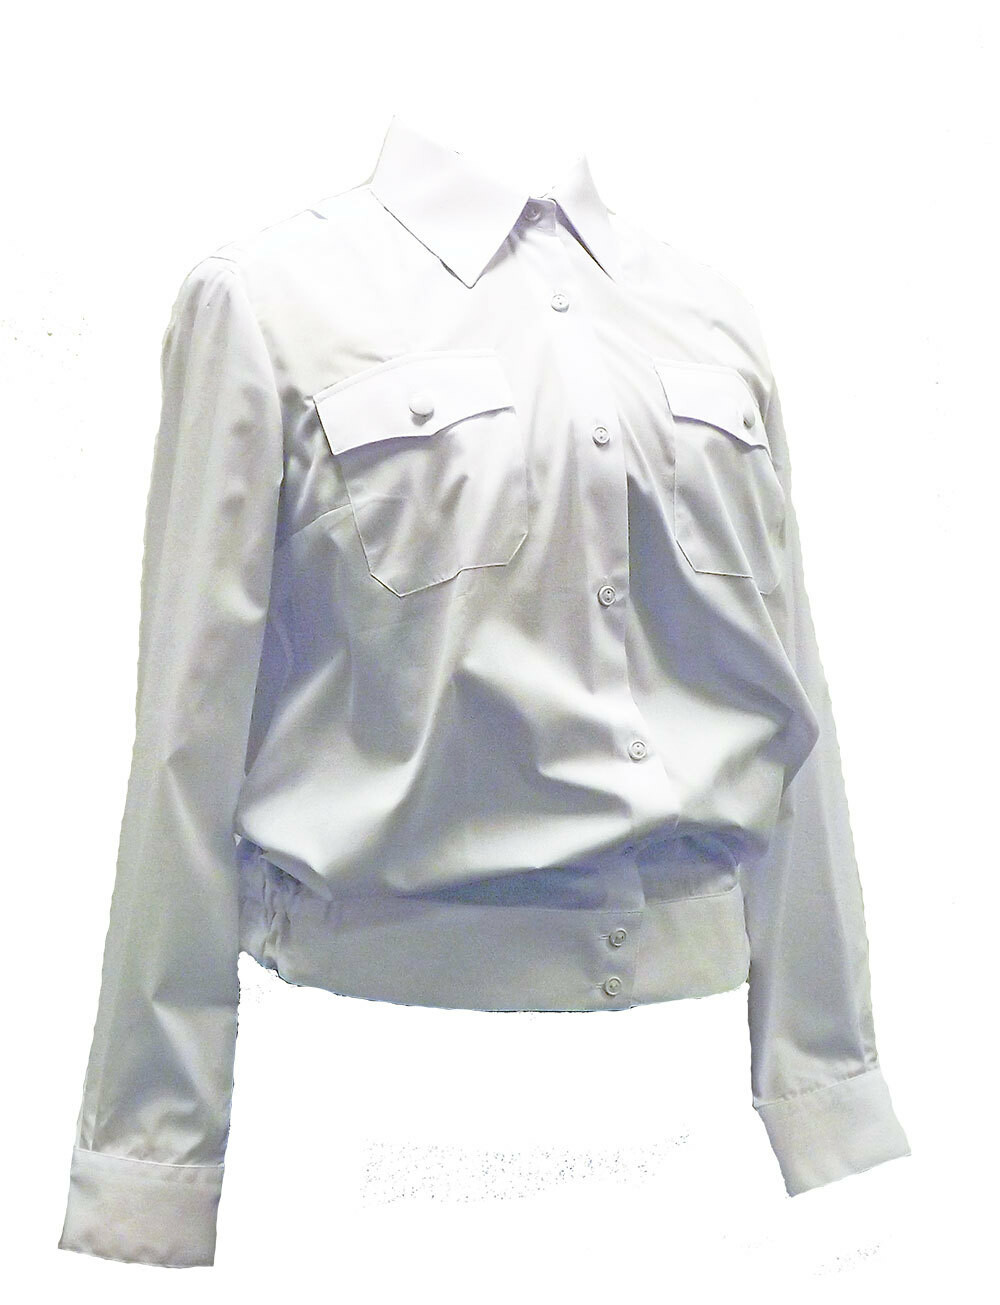 Рубашка форменная белая Юдашкин